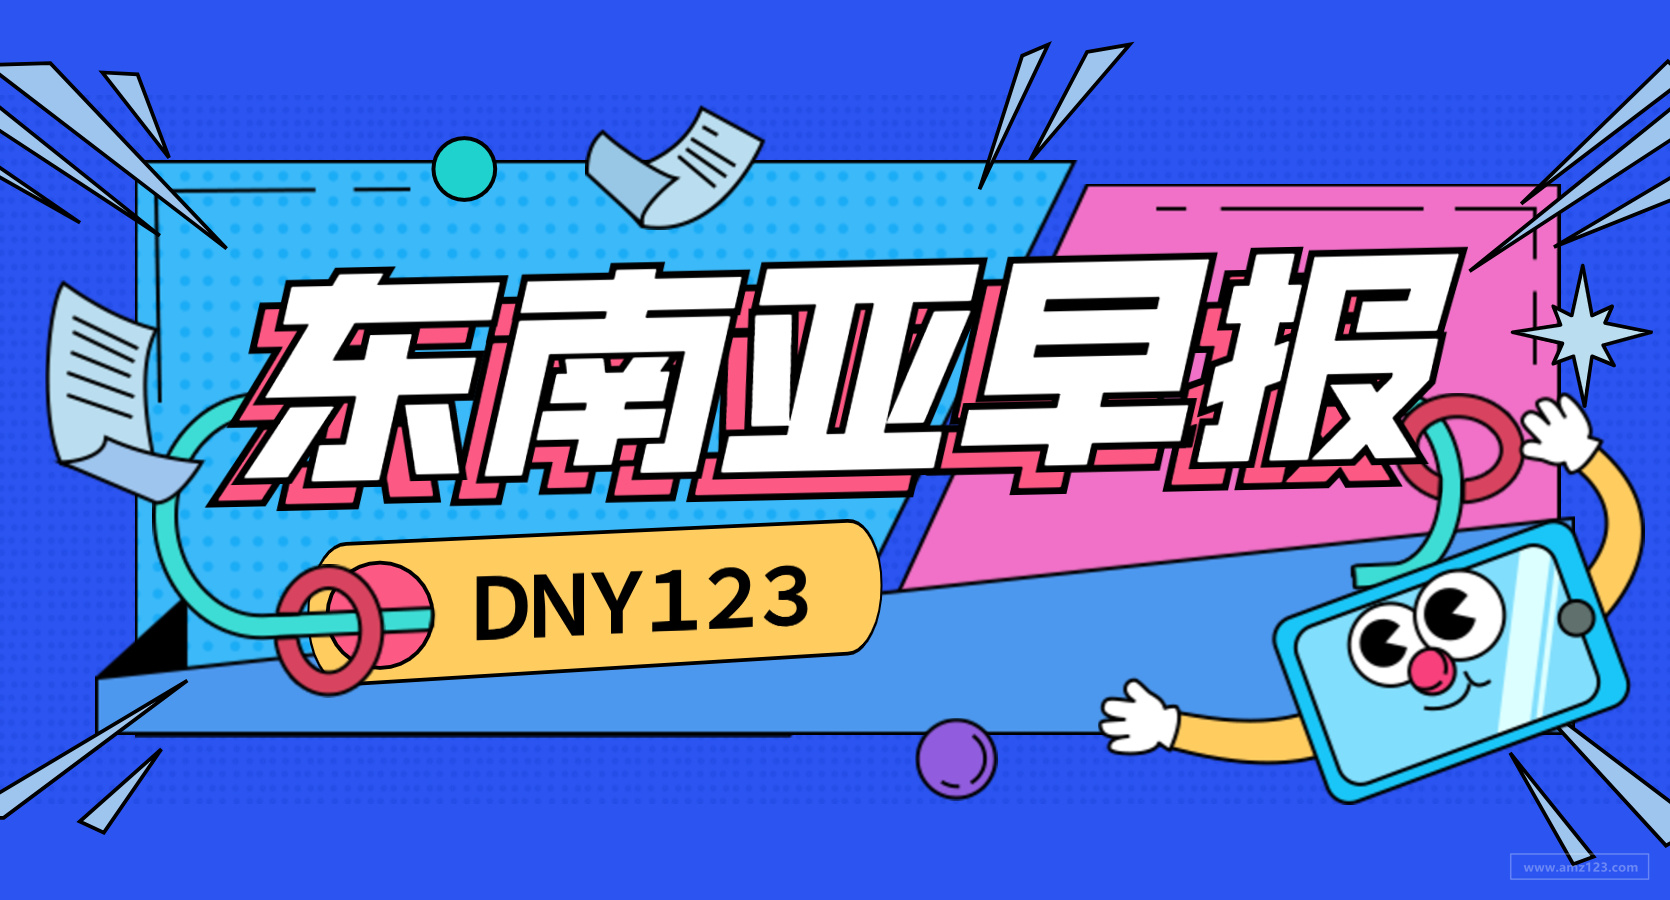 【DNY123跨境早报】印尼电商初创公司Desty获得320万美元A轮融资，越南电商平台Buy2Sell上半年销售额增长2倍